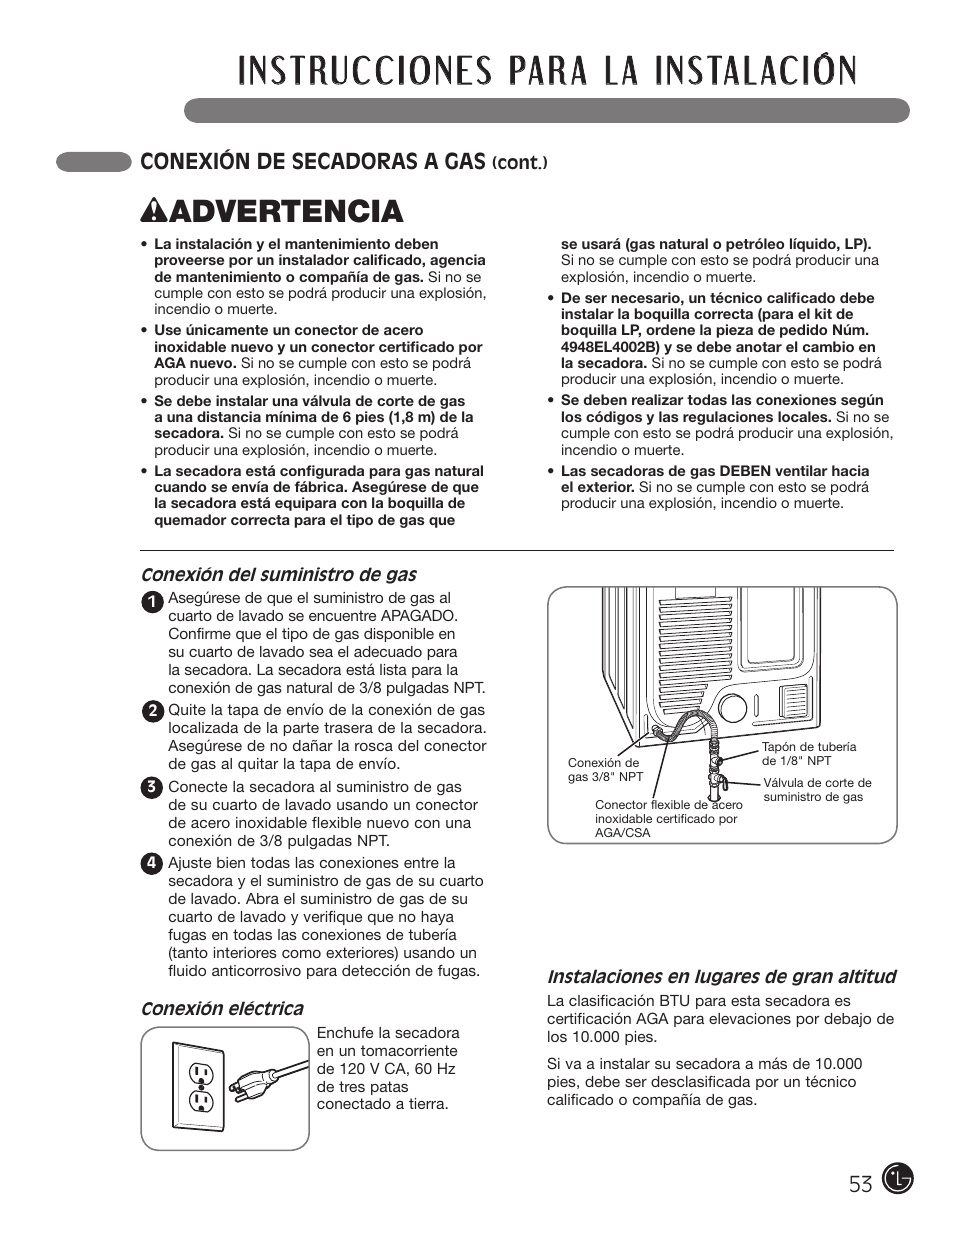 W advertencia, Conexión de secadoras a gas | LG D5966W User Manual | Page 53 / 80